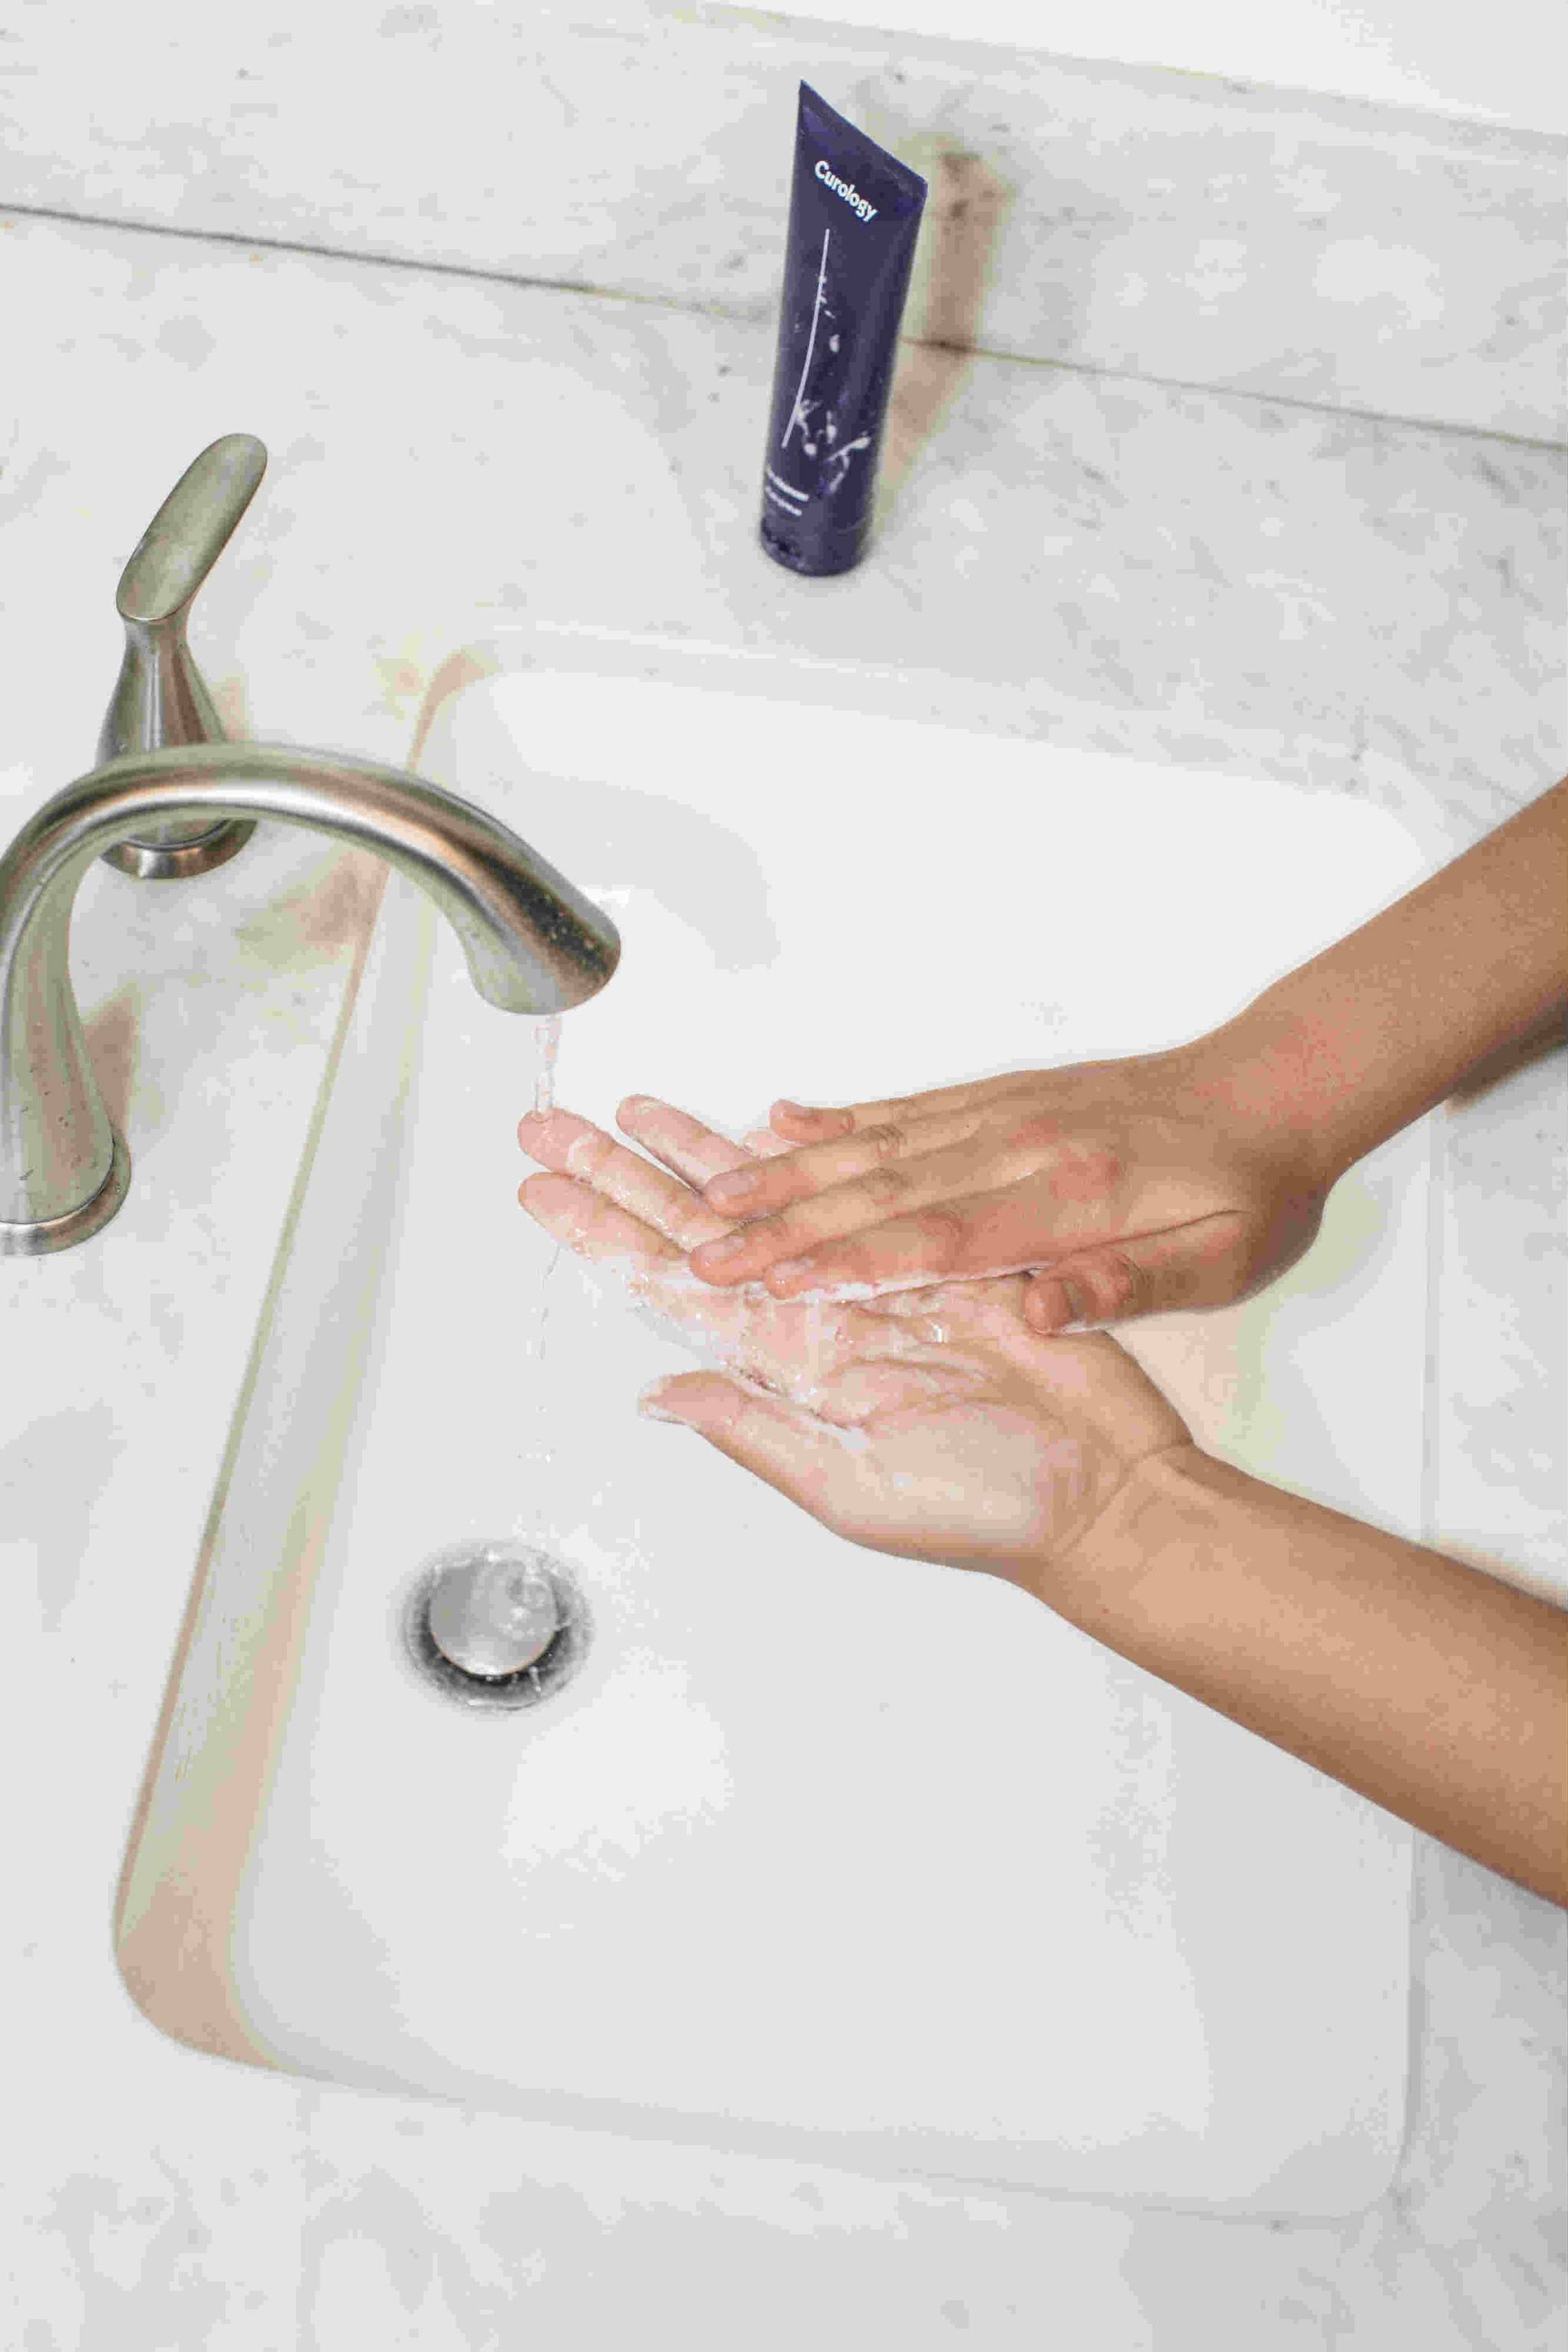 Lush's handwash stations encourage good hygiene